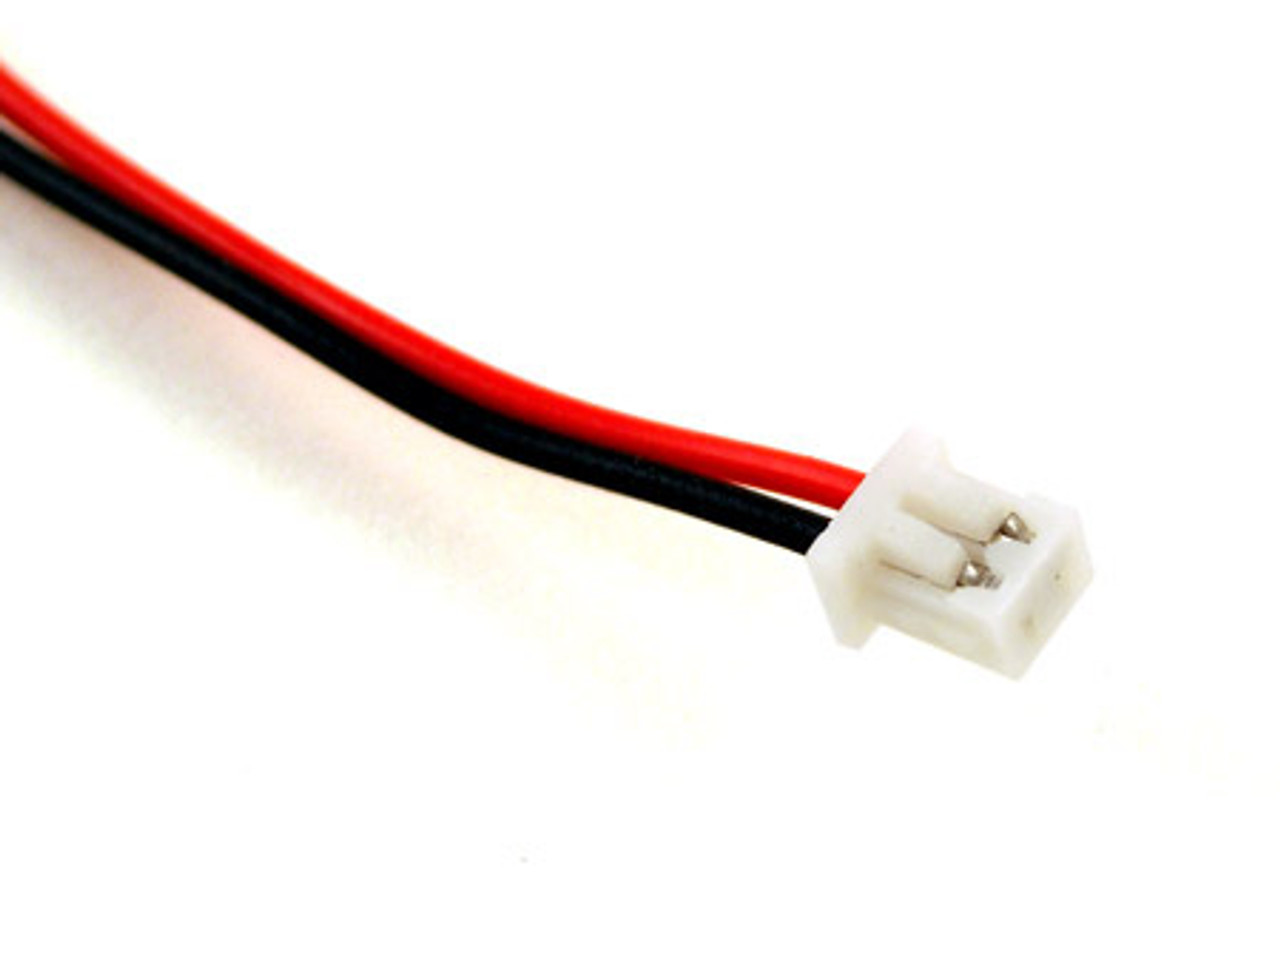 two pin molex connector